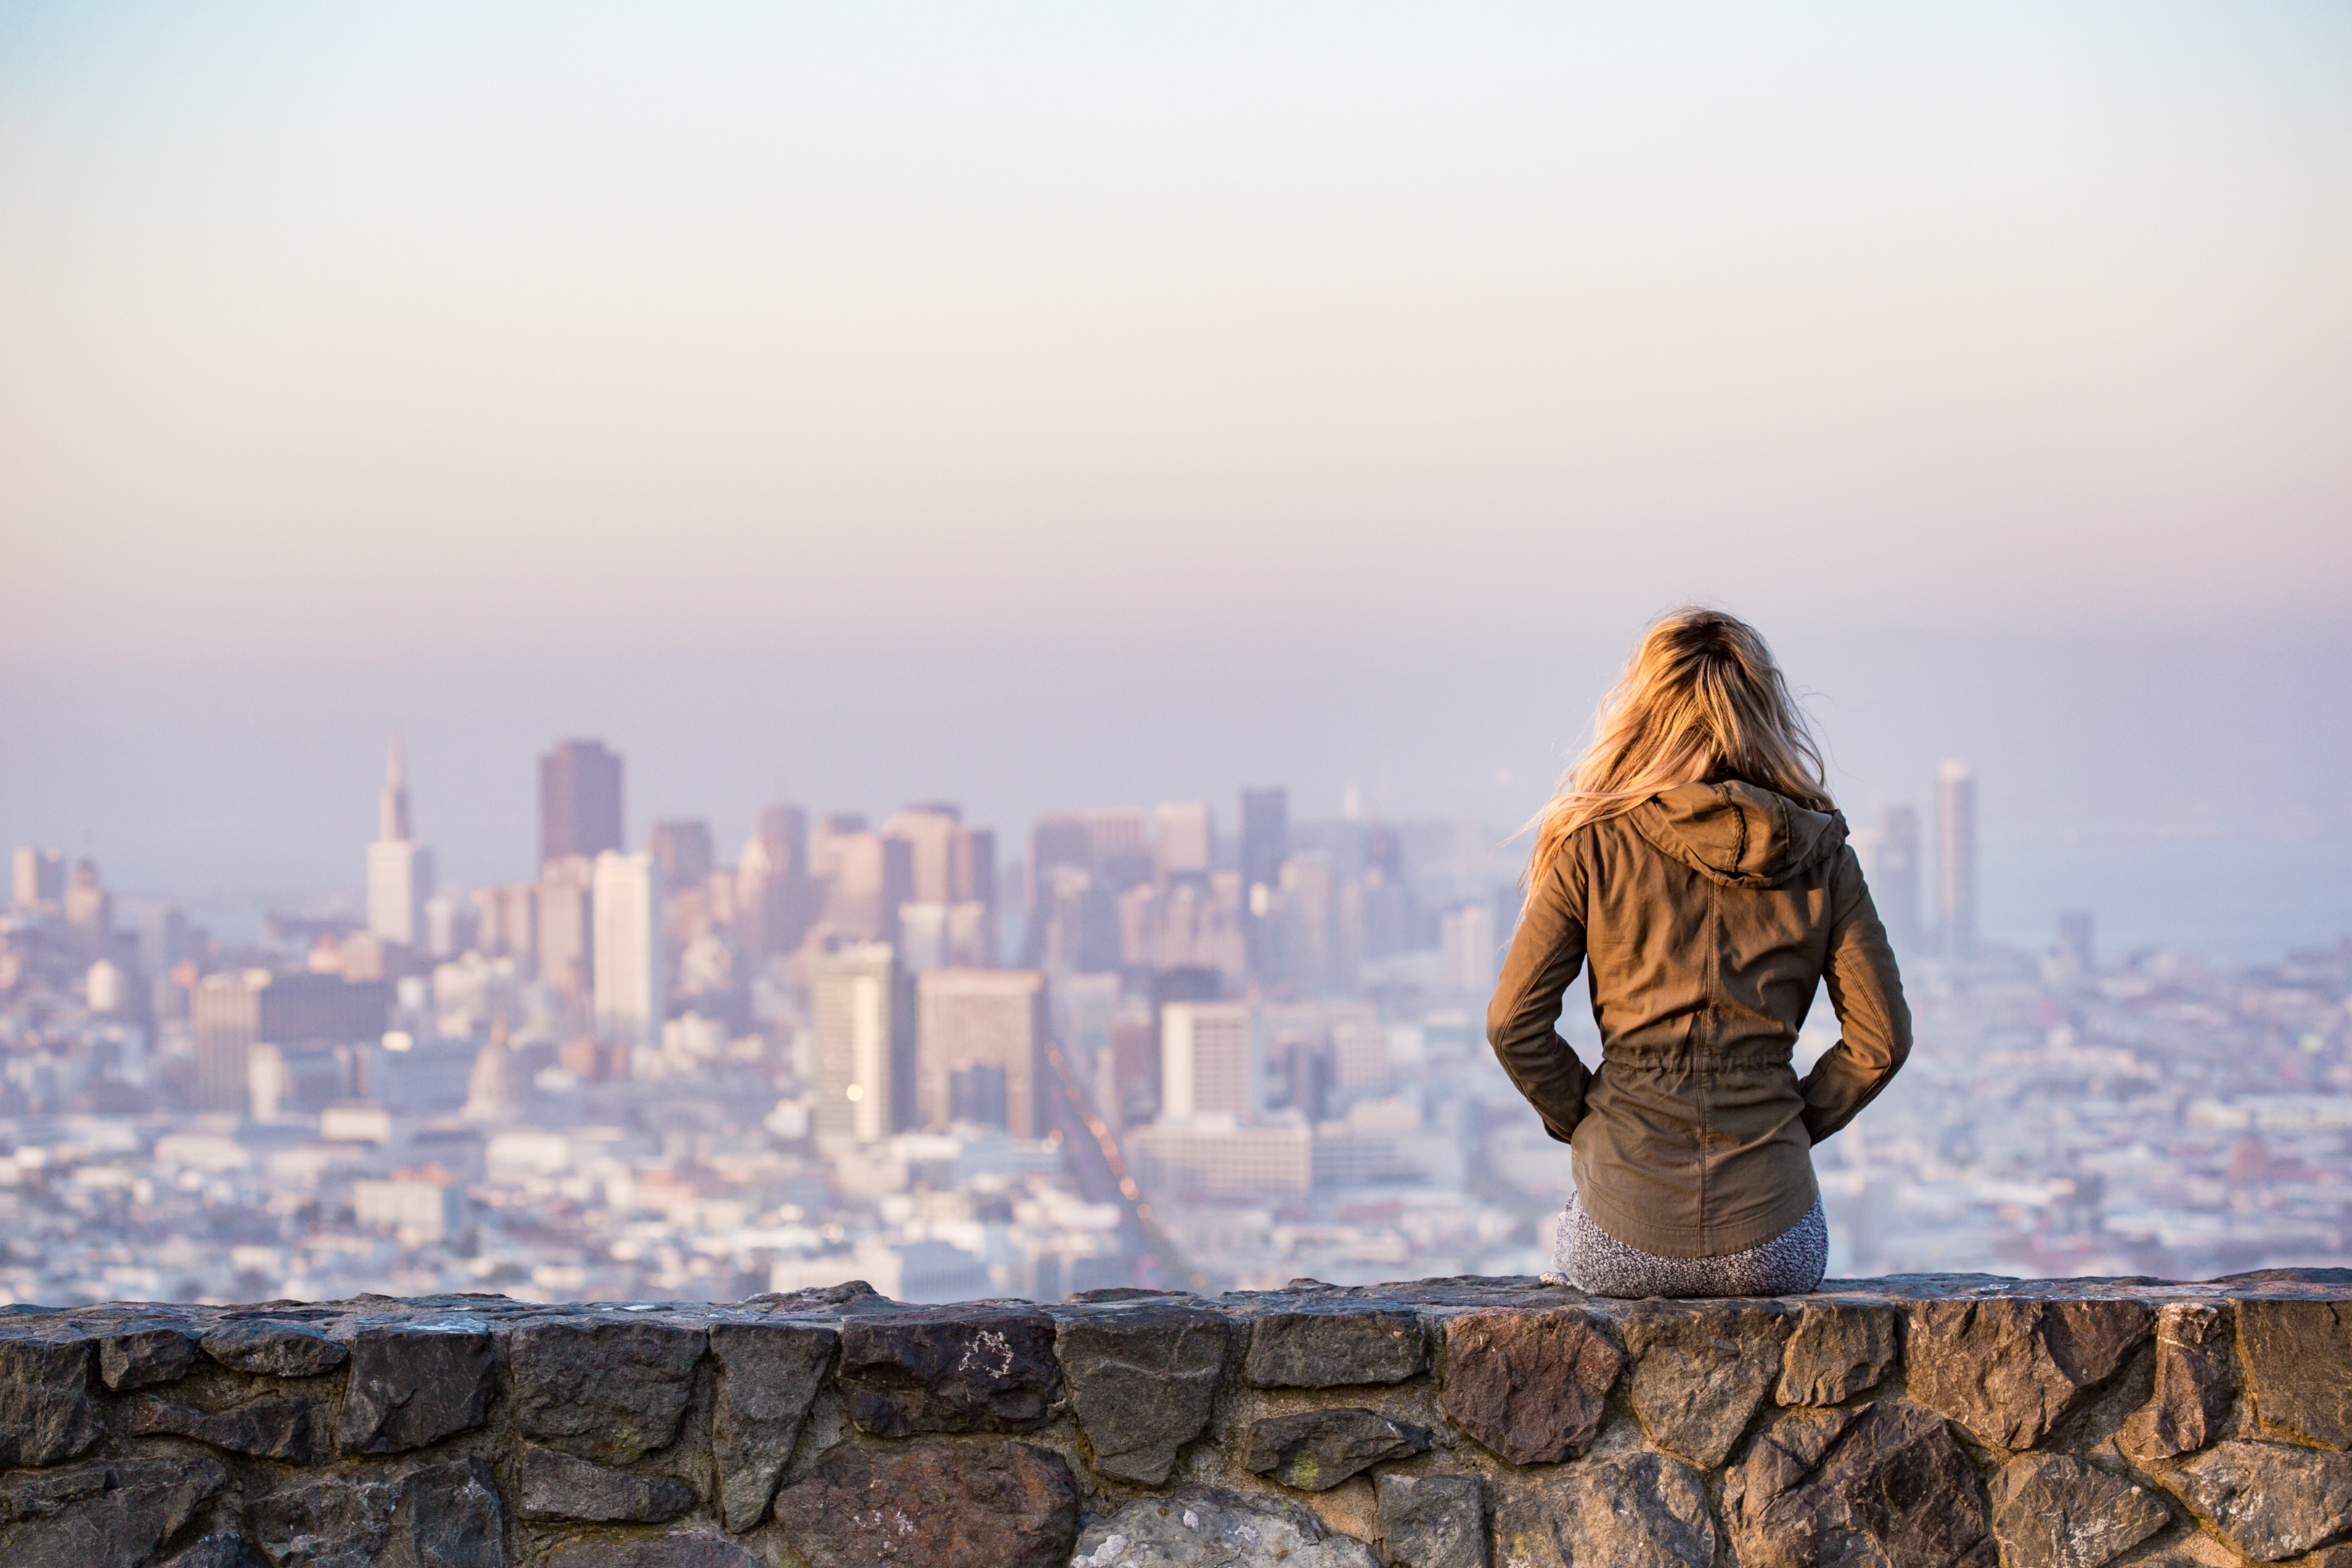 Woman sitting on brick platform admiring a city